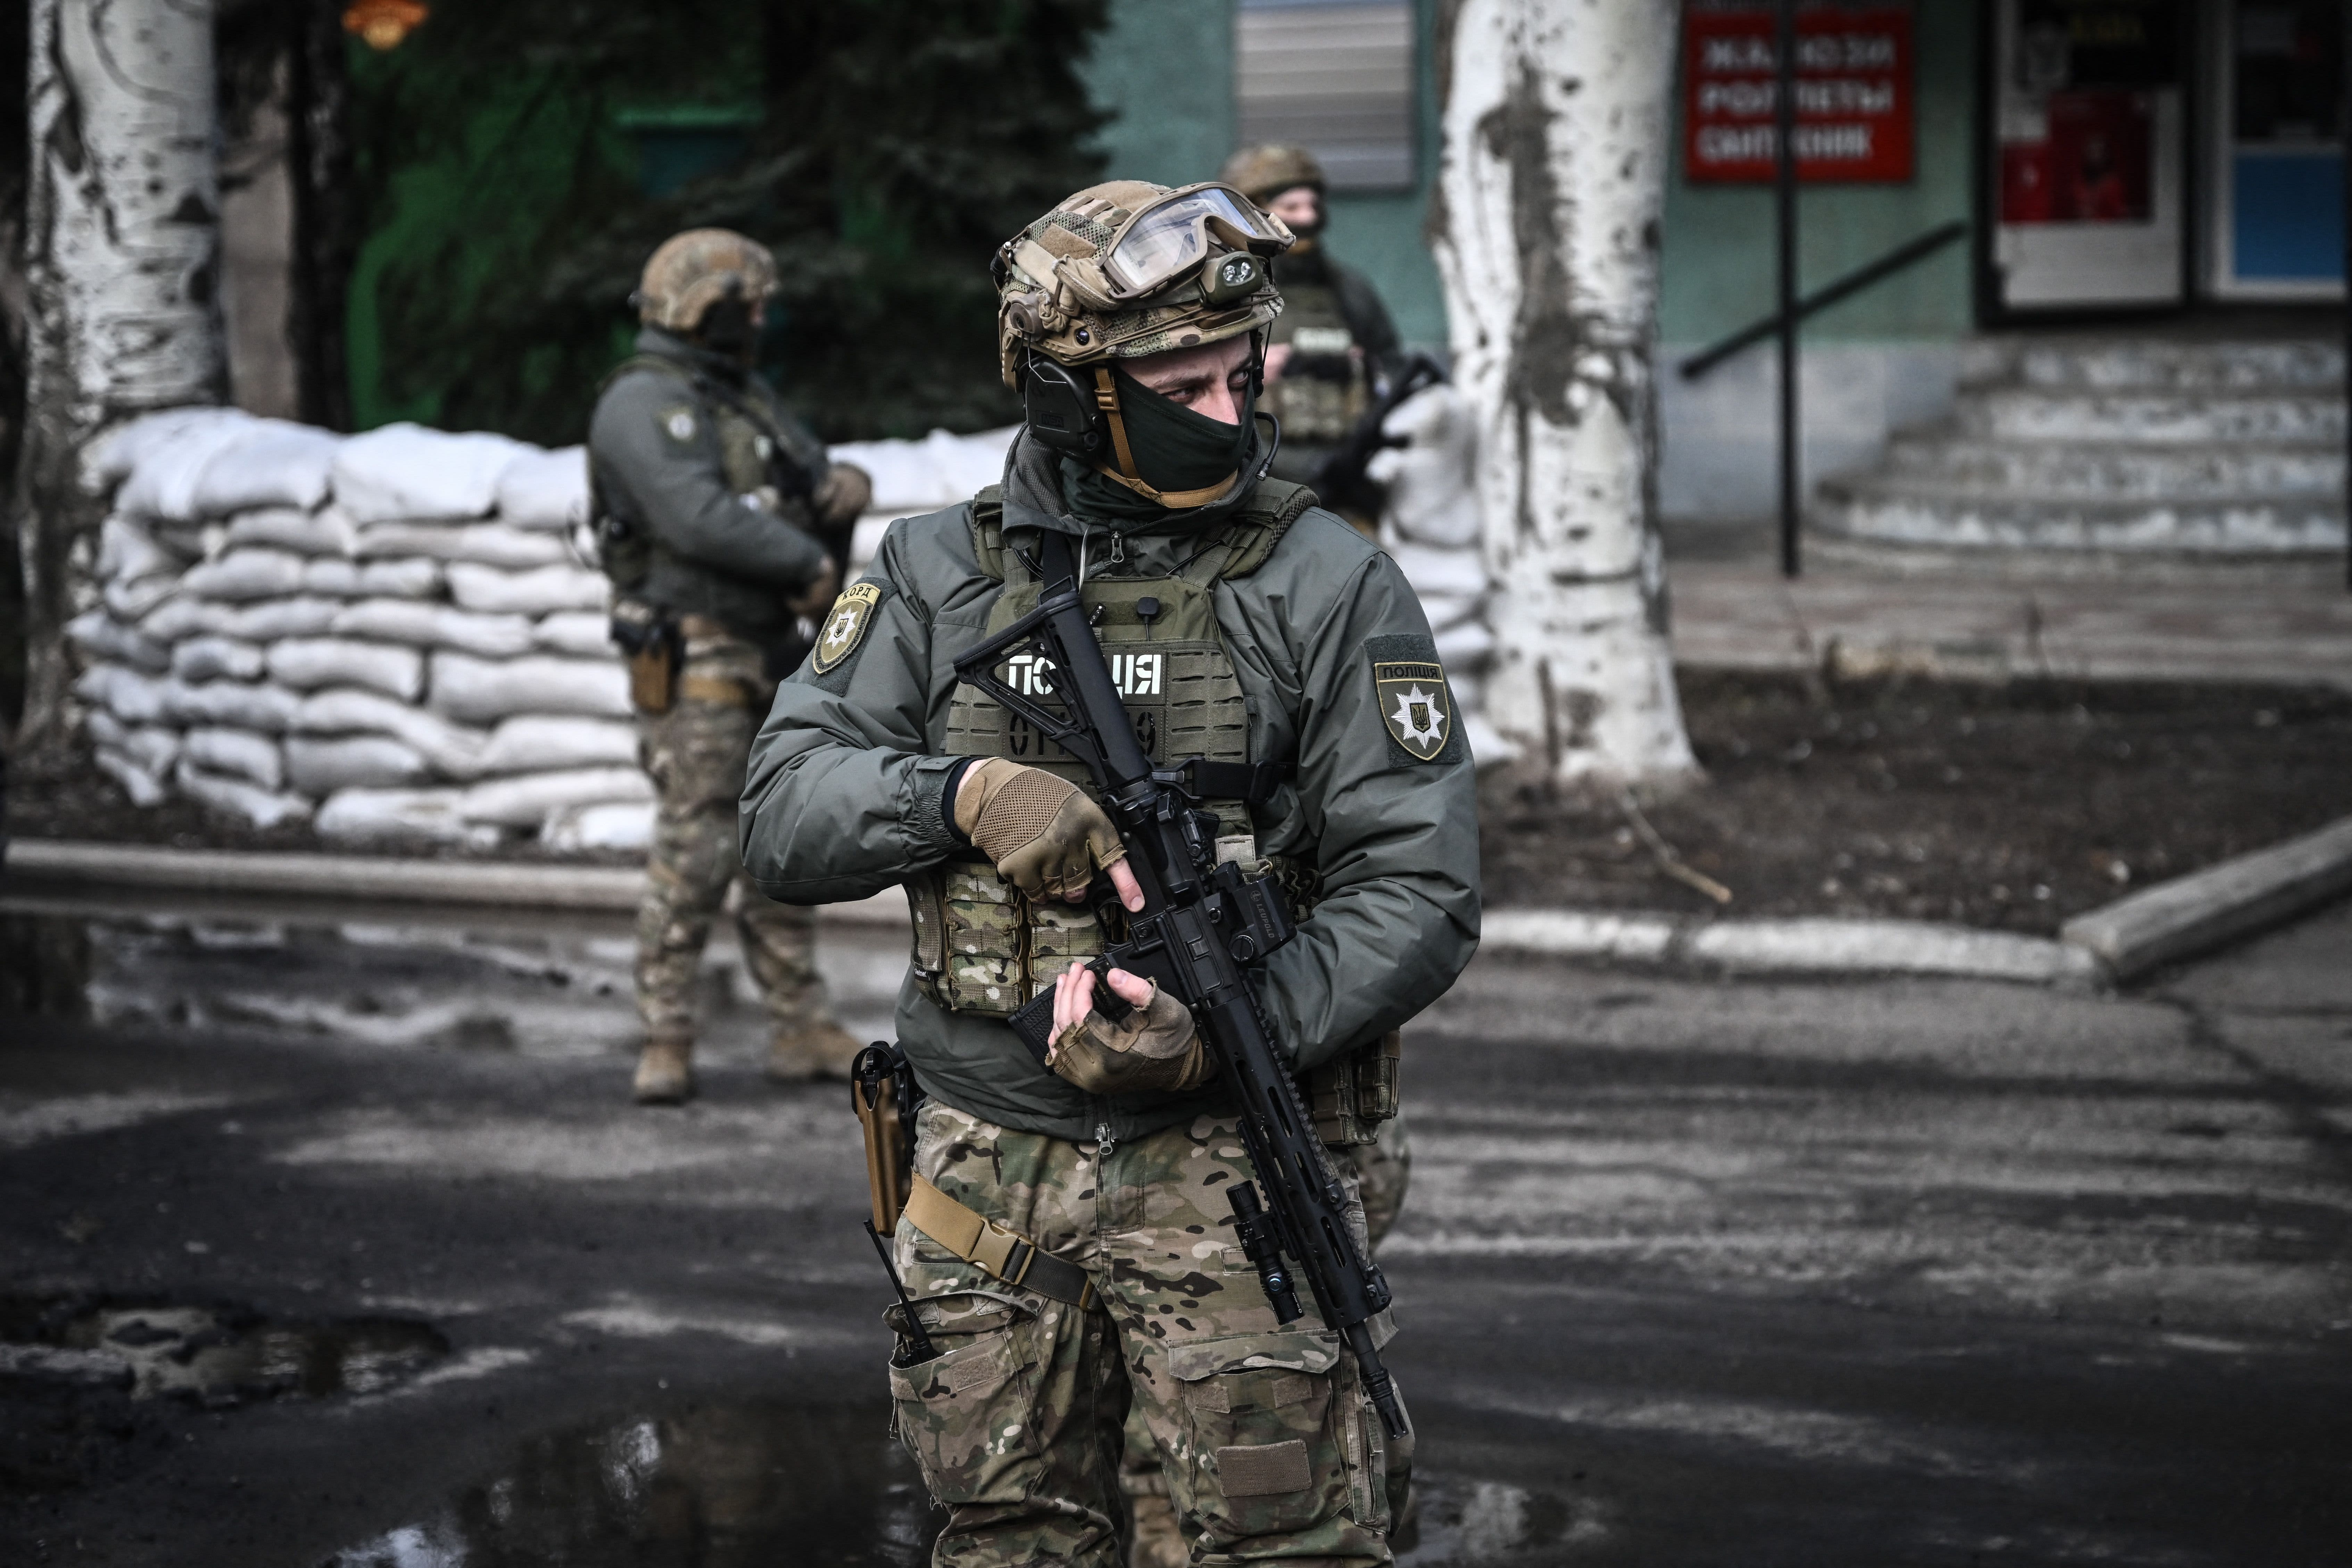 Putin seeks ‘regime change’ and is likely to invade Ukraine: Analyst